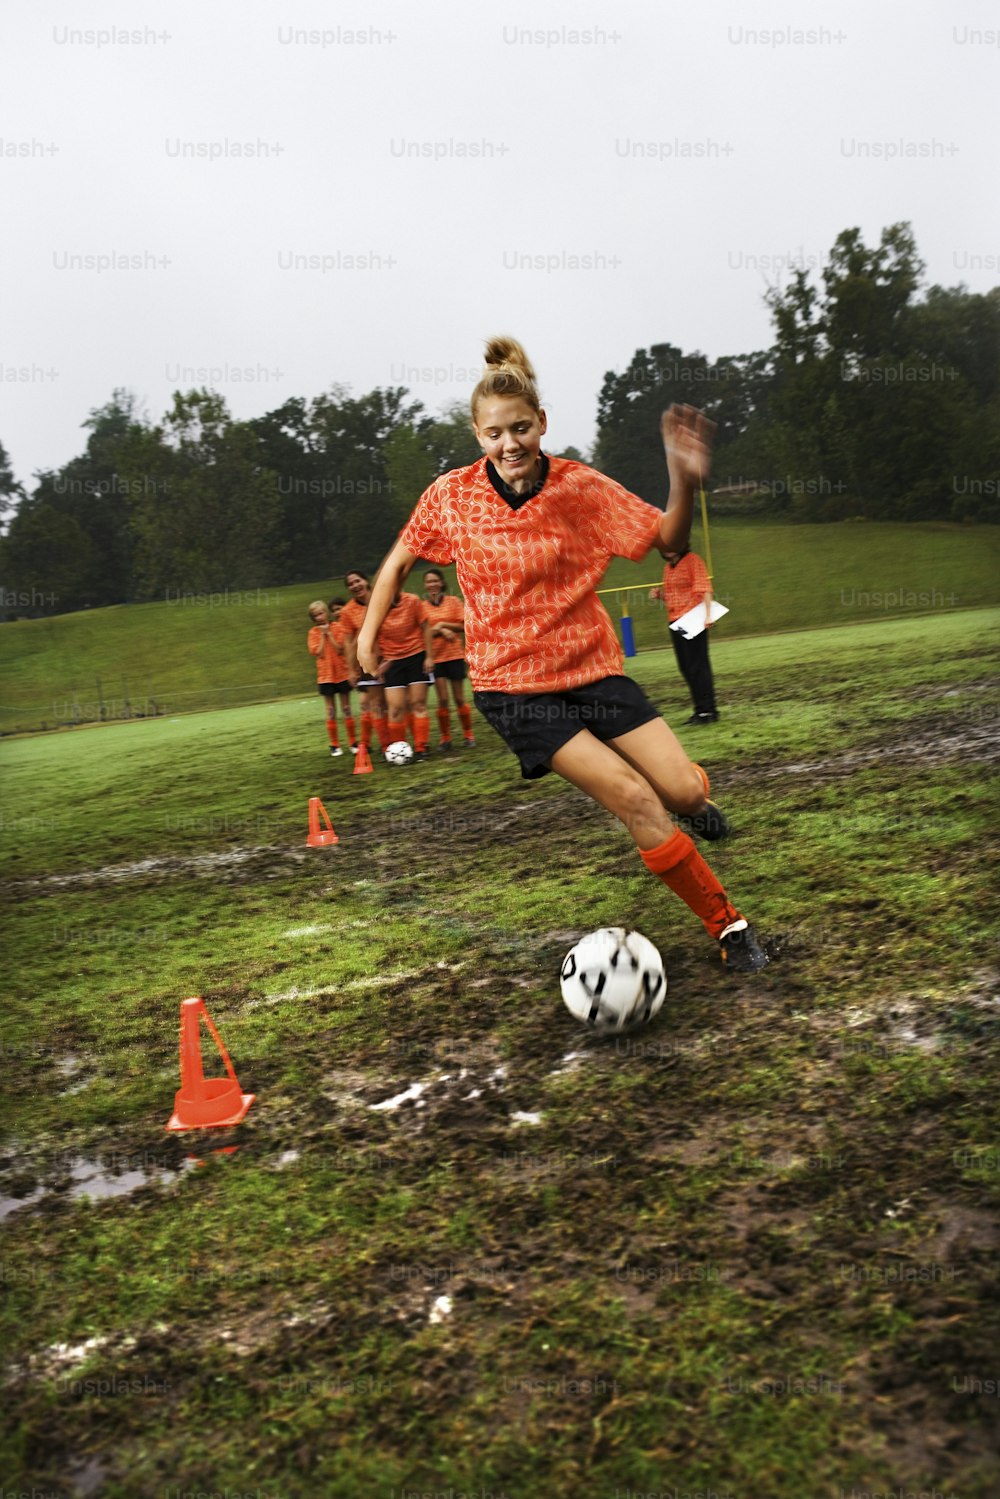 a girl in an orange shirt is kicking a soccer ball